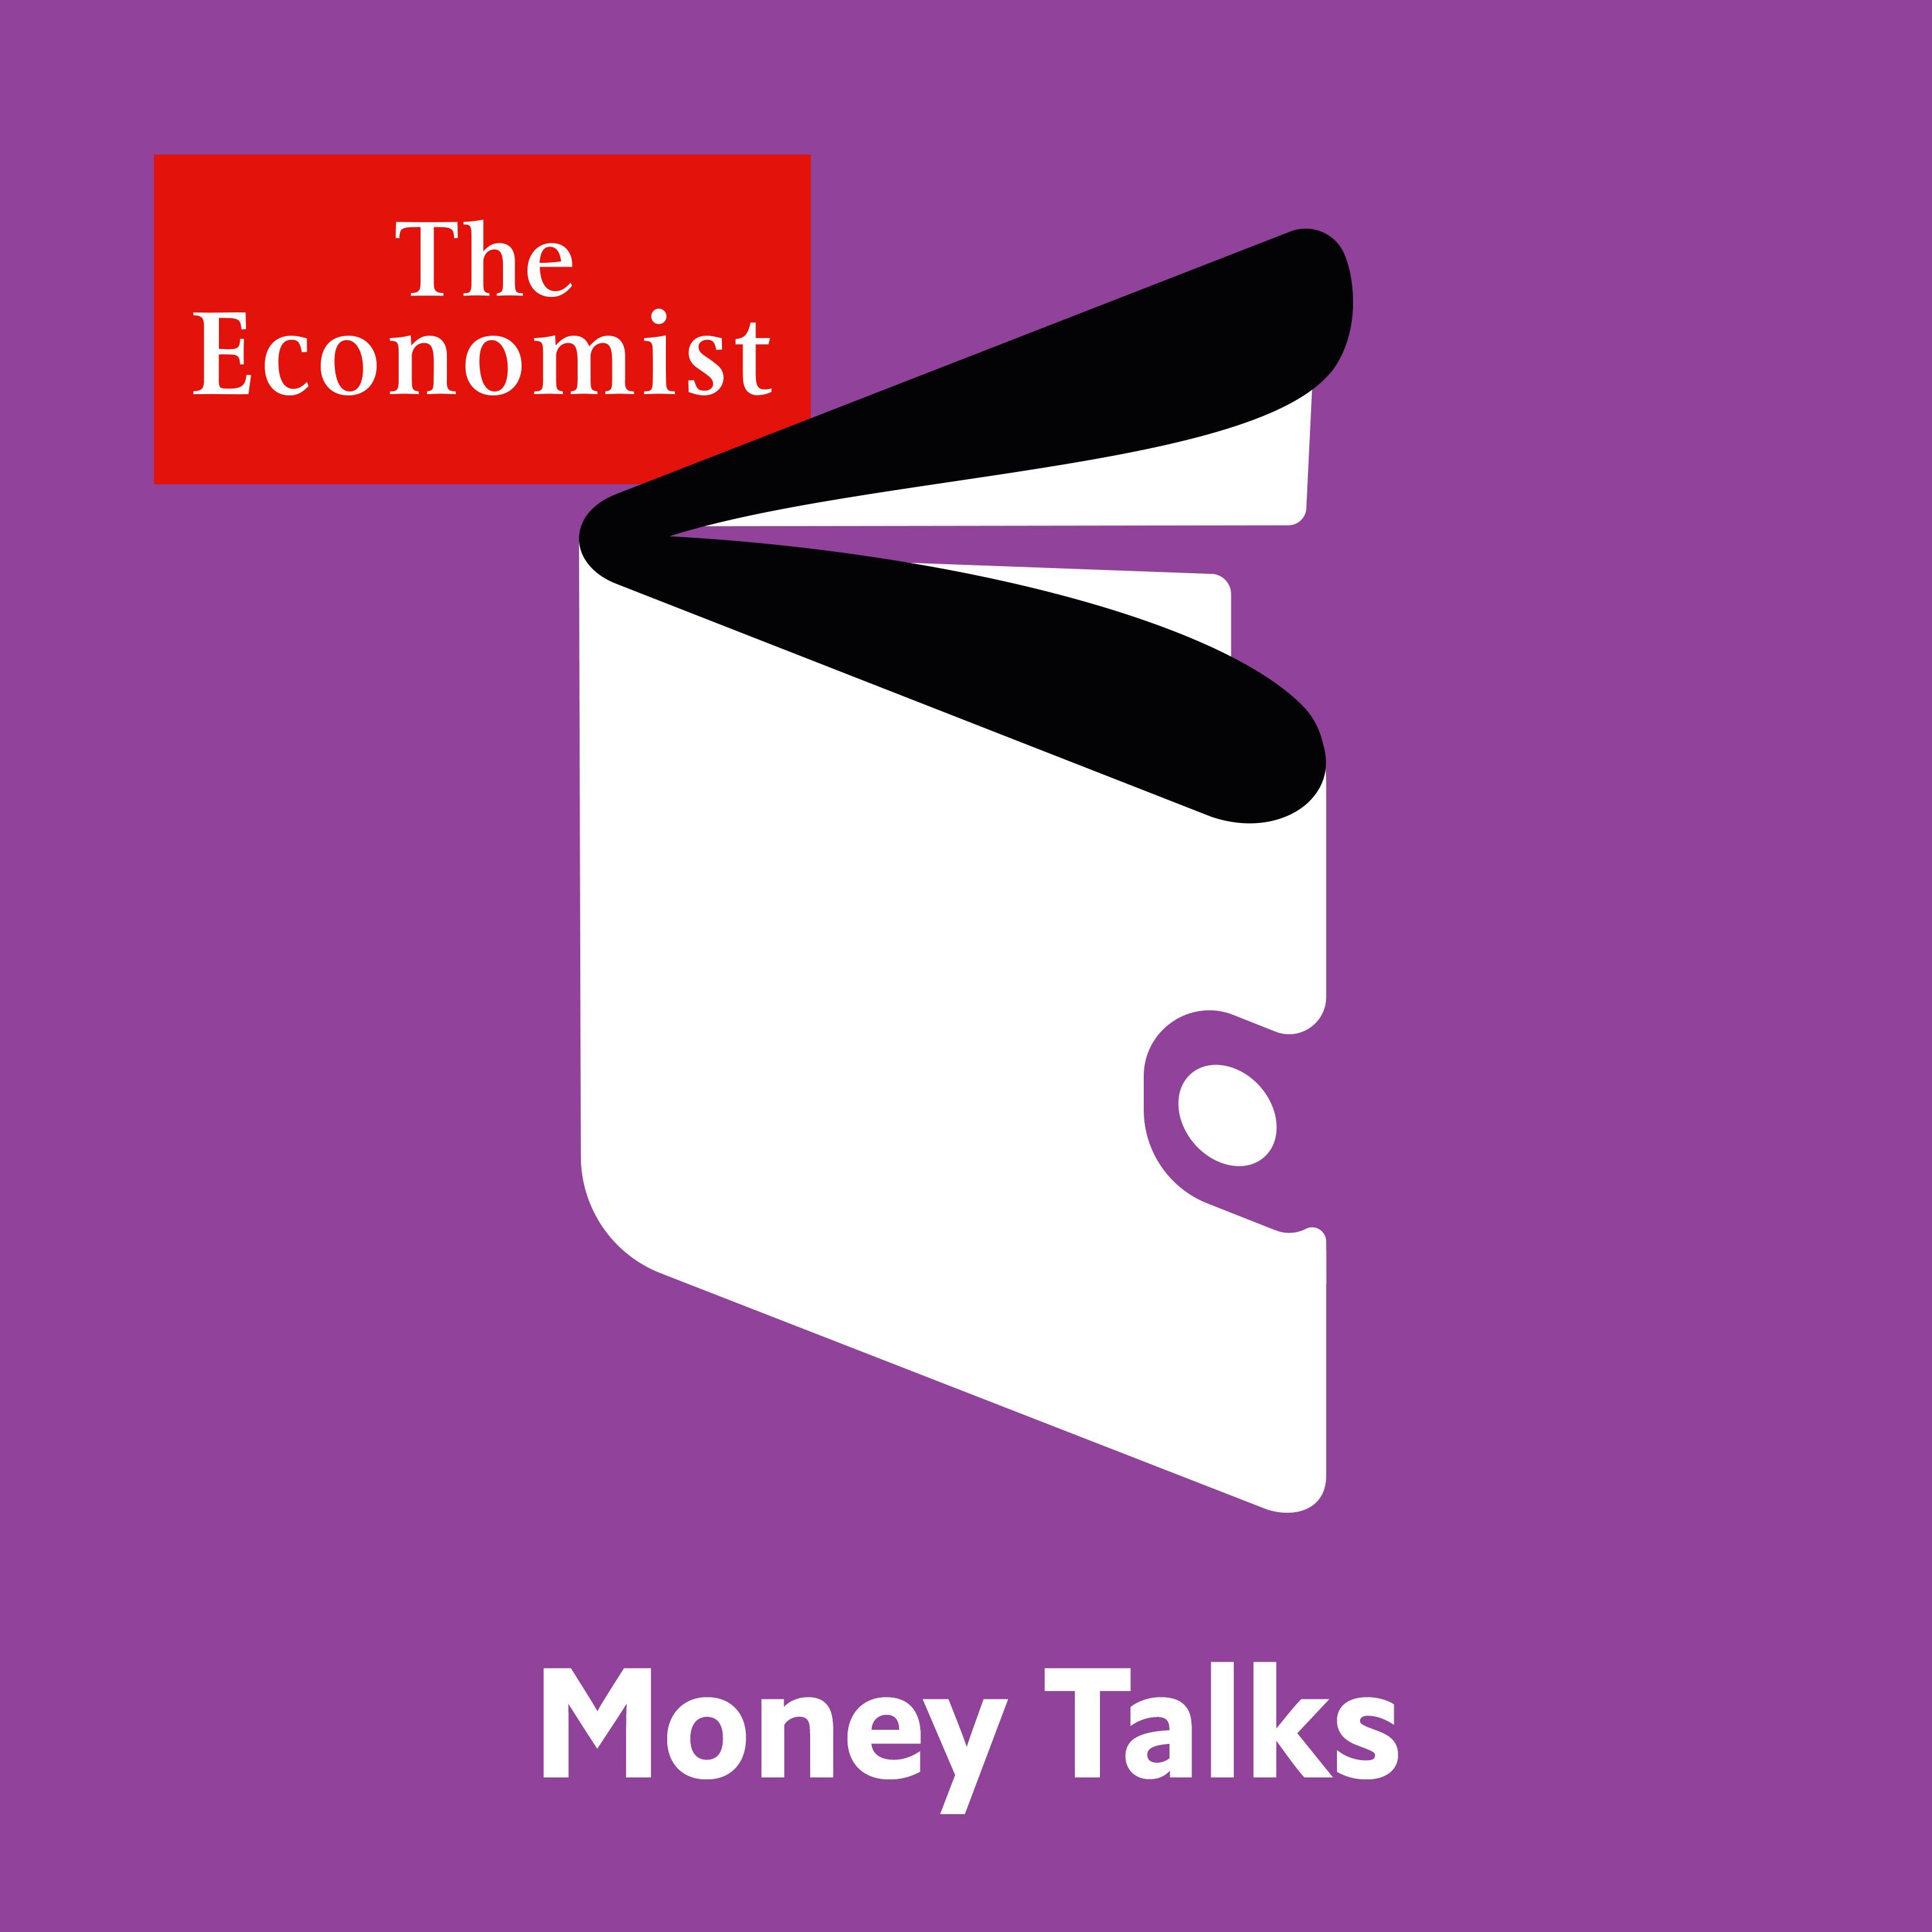 Money Talks: The bossy state